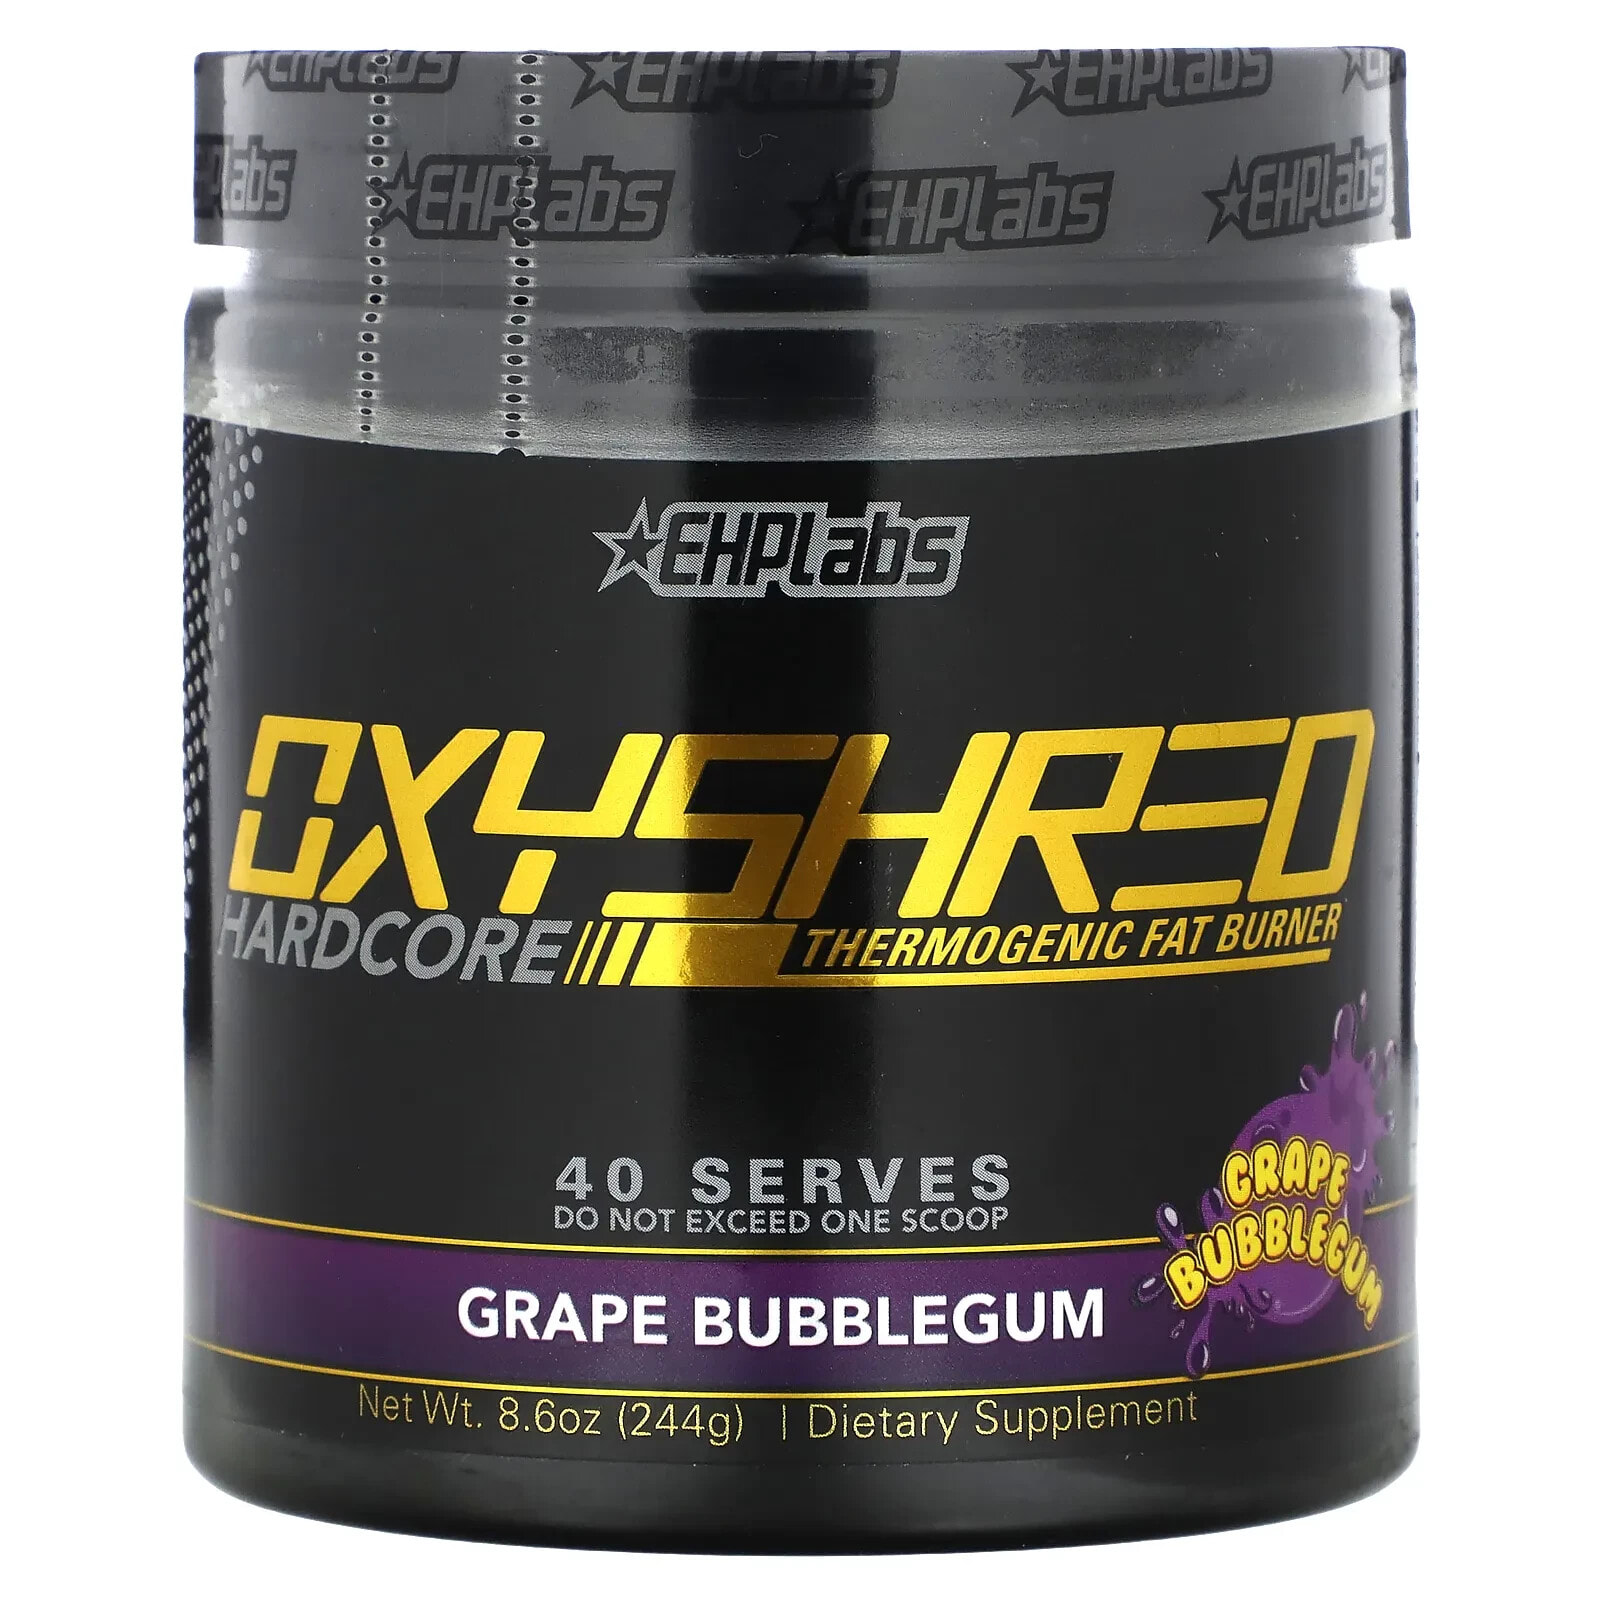 OxyShred Hardcore, Thermogenic Fat Burner, Grape Bubblegum, 8.6 oz (244 g)